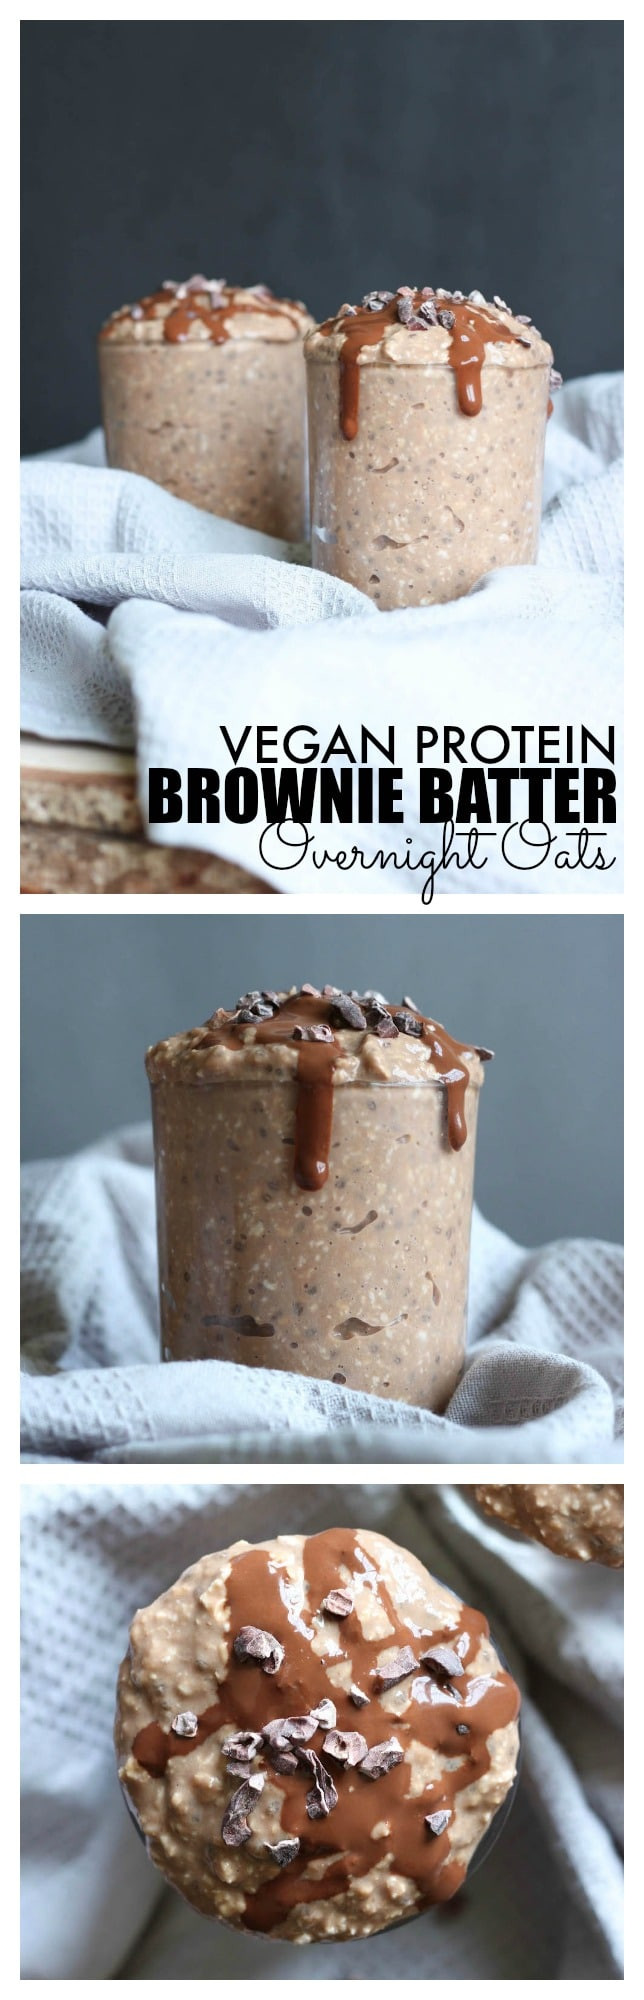 Vegan Protein Overnight Oats
 Brownie Batter Vegan Protein Overnight Oats